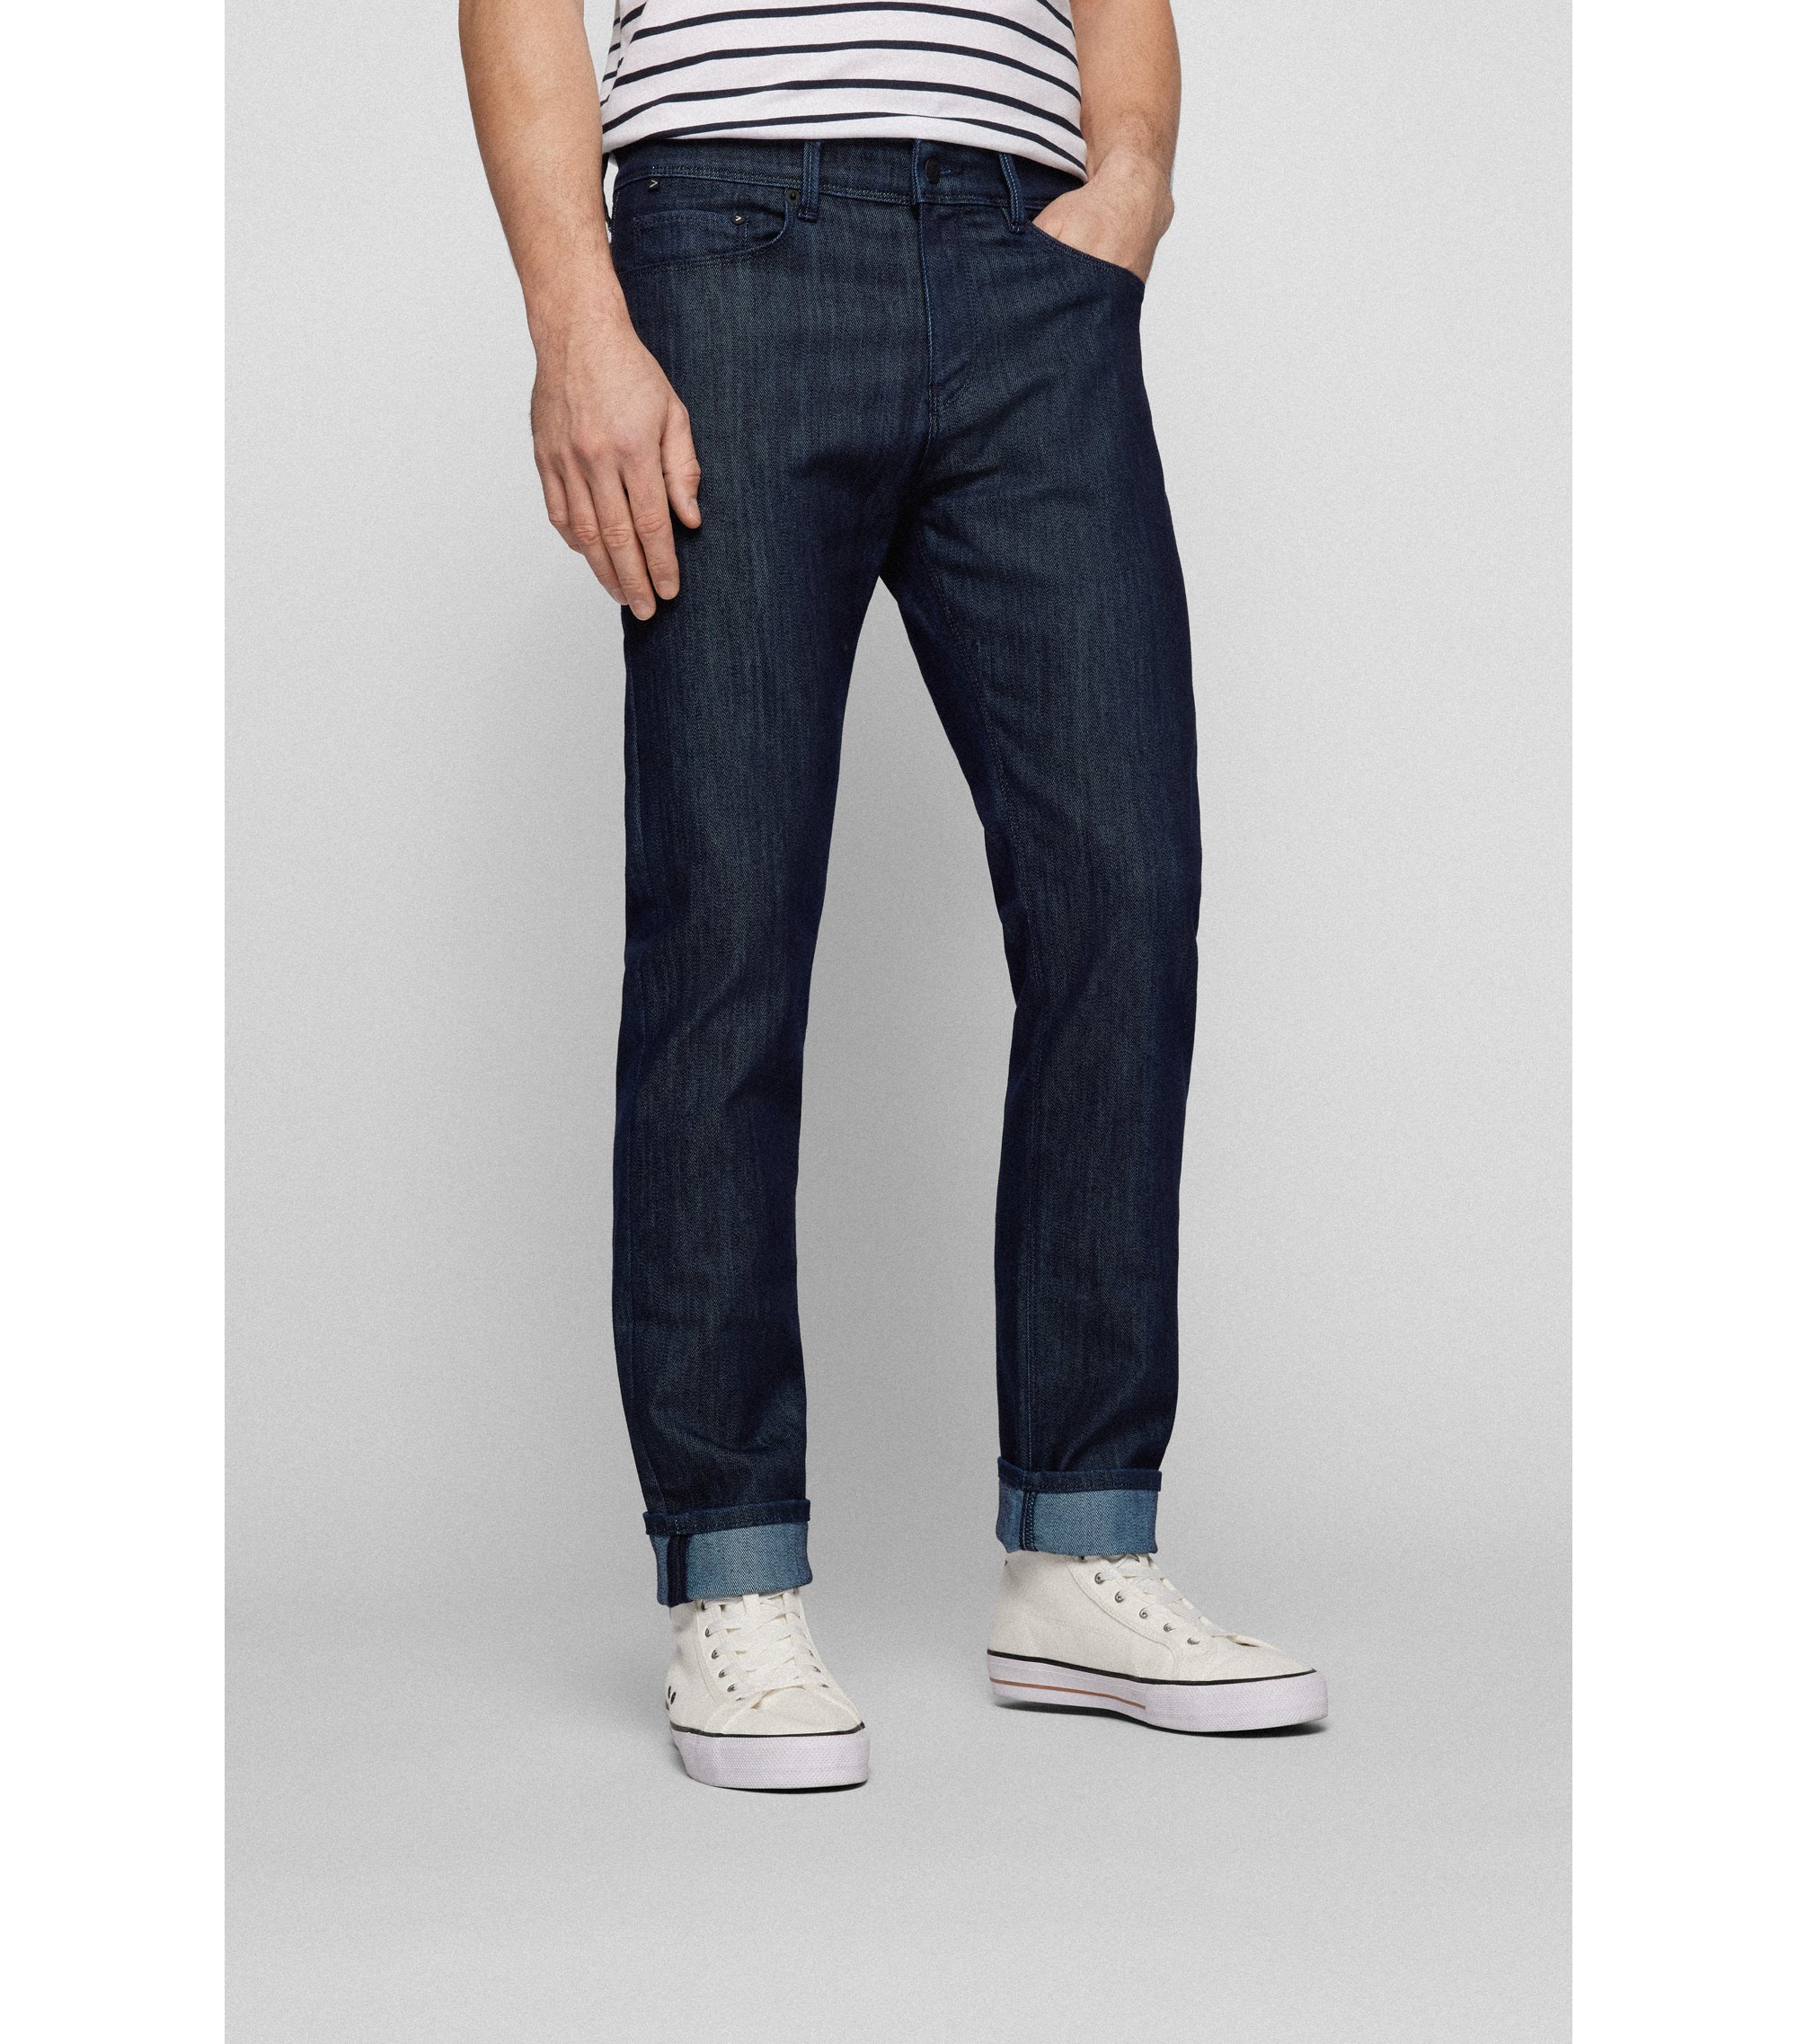 Mens Blue Fashion Stylish Jeans by VON DENIM with Heavy Detailing